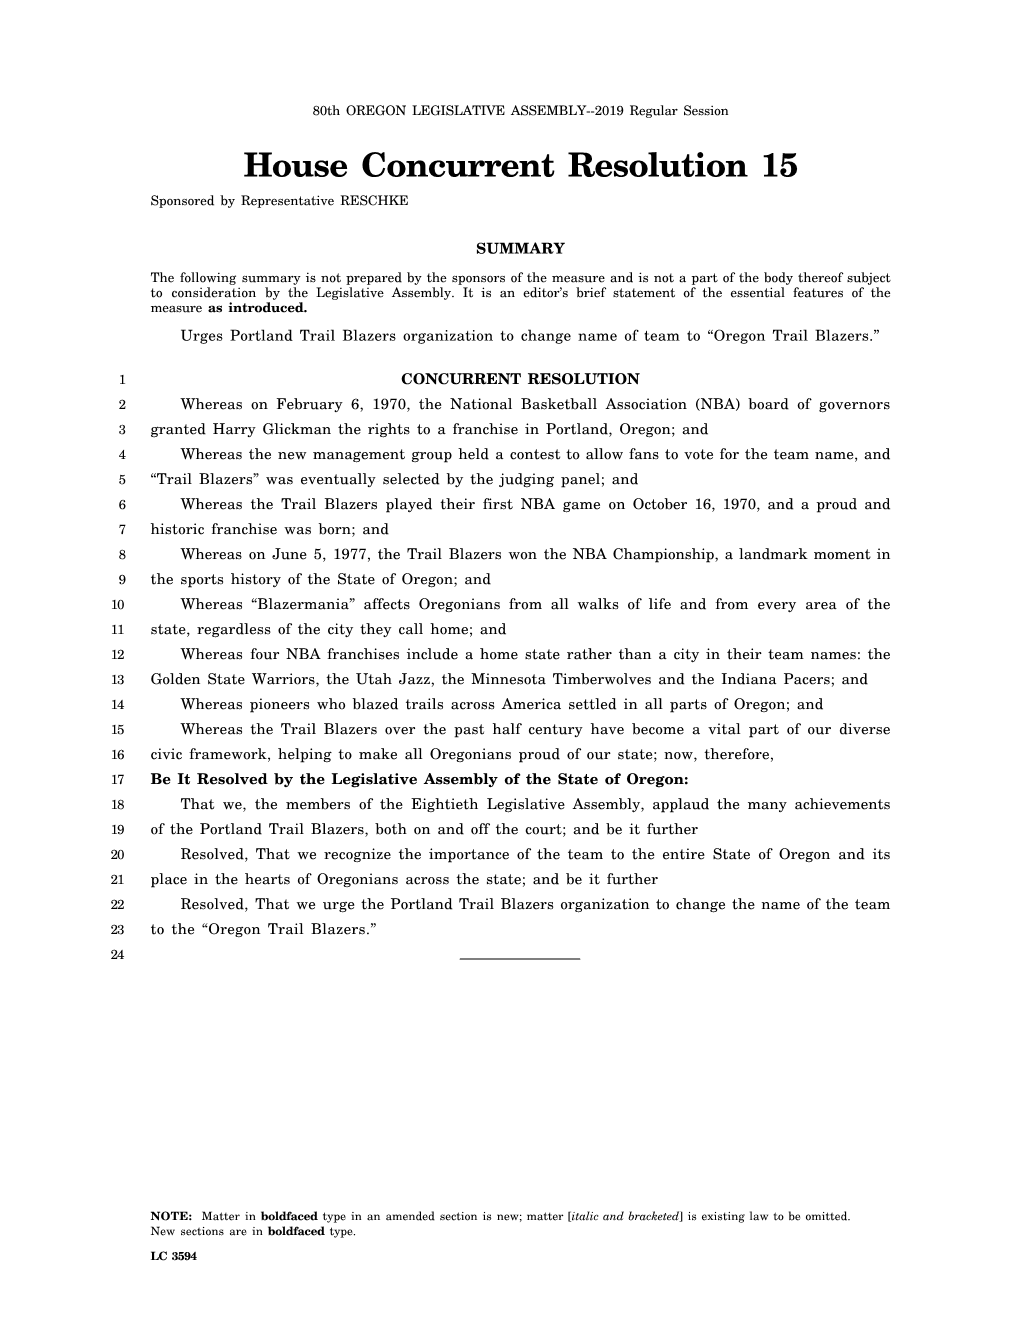 House Concurrent Resolution 15 Sponsored by Representative RESCHKE